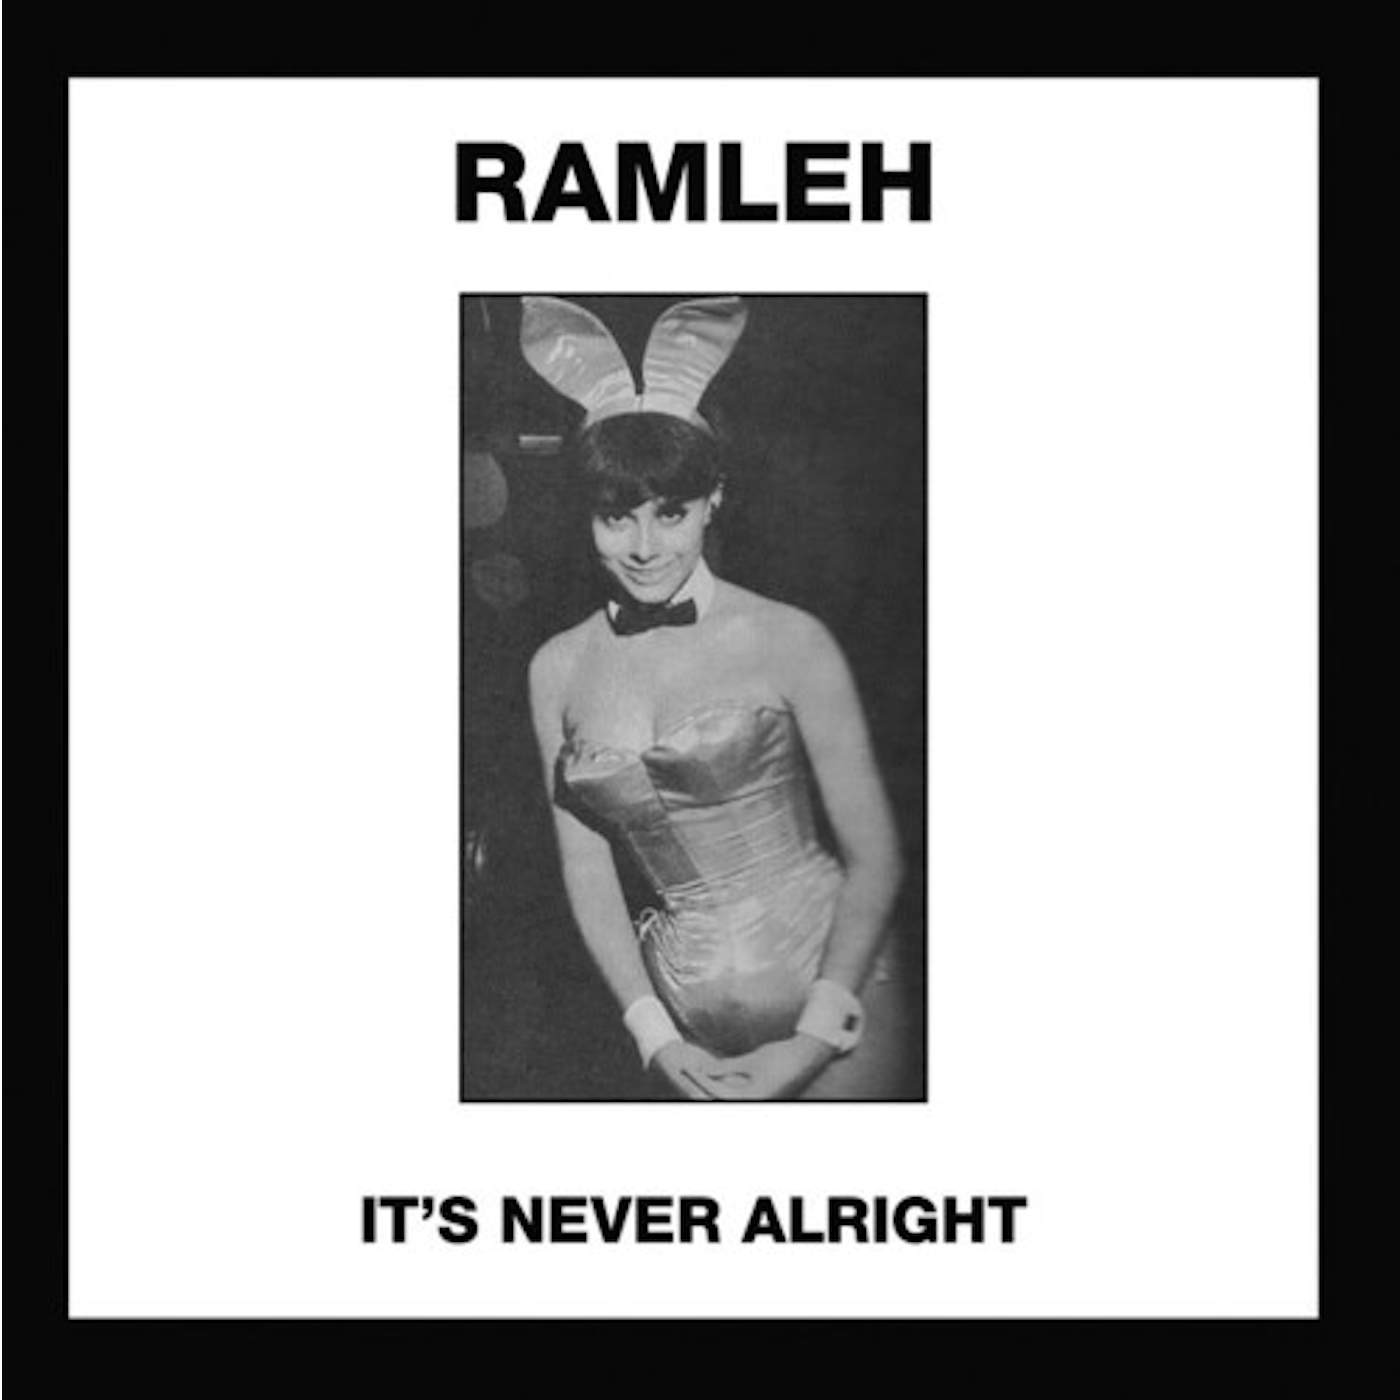 Ramleh IT'S NEVER ALRIGHT / KERB KRAWLER Vinyl Record